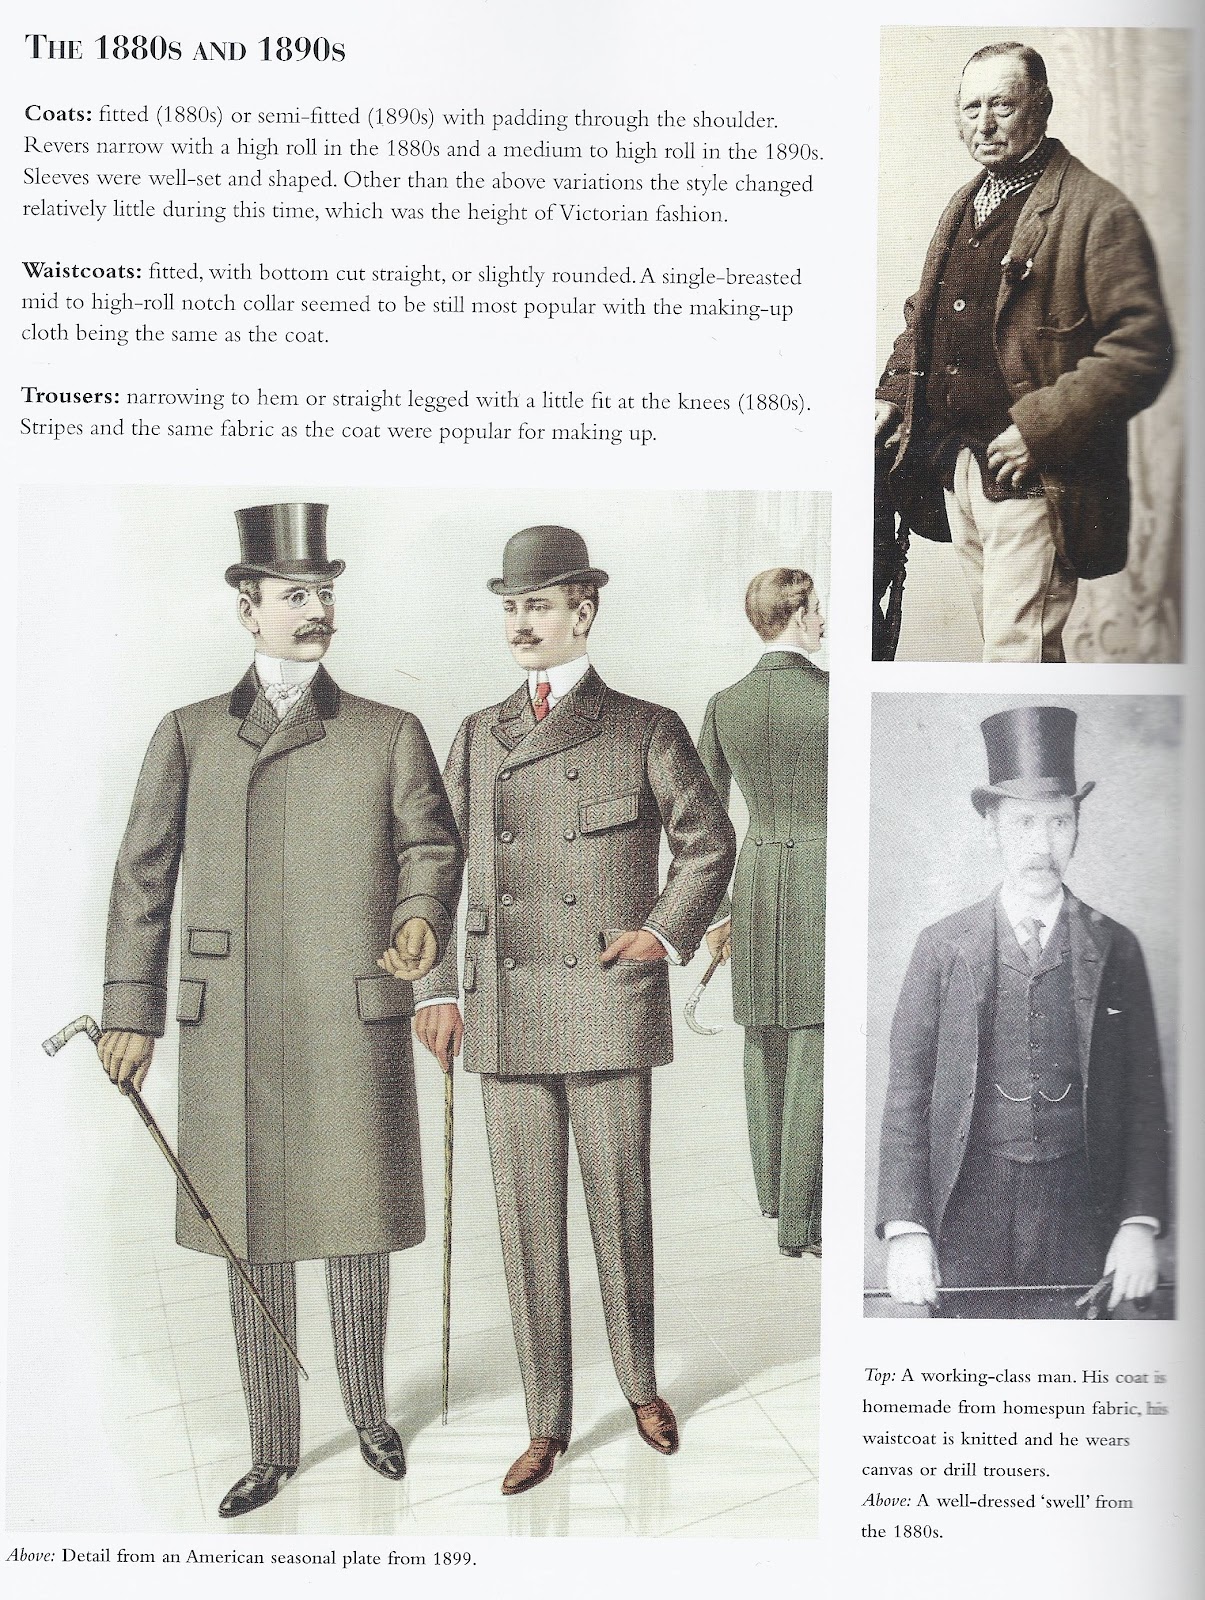 SDP Tailoring: Victorian Gentleman's Fashion